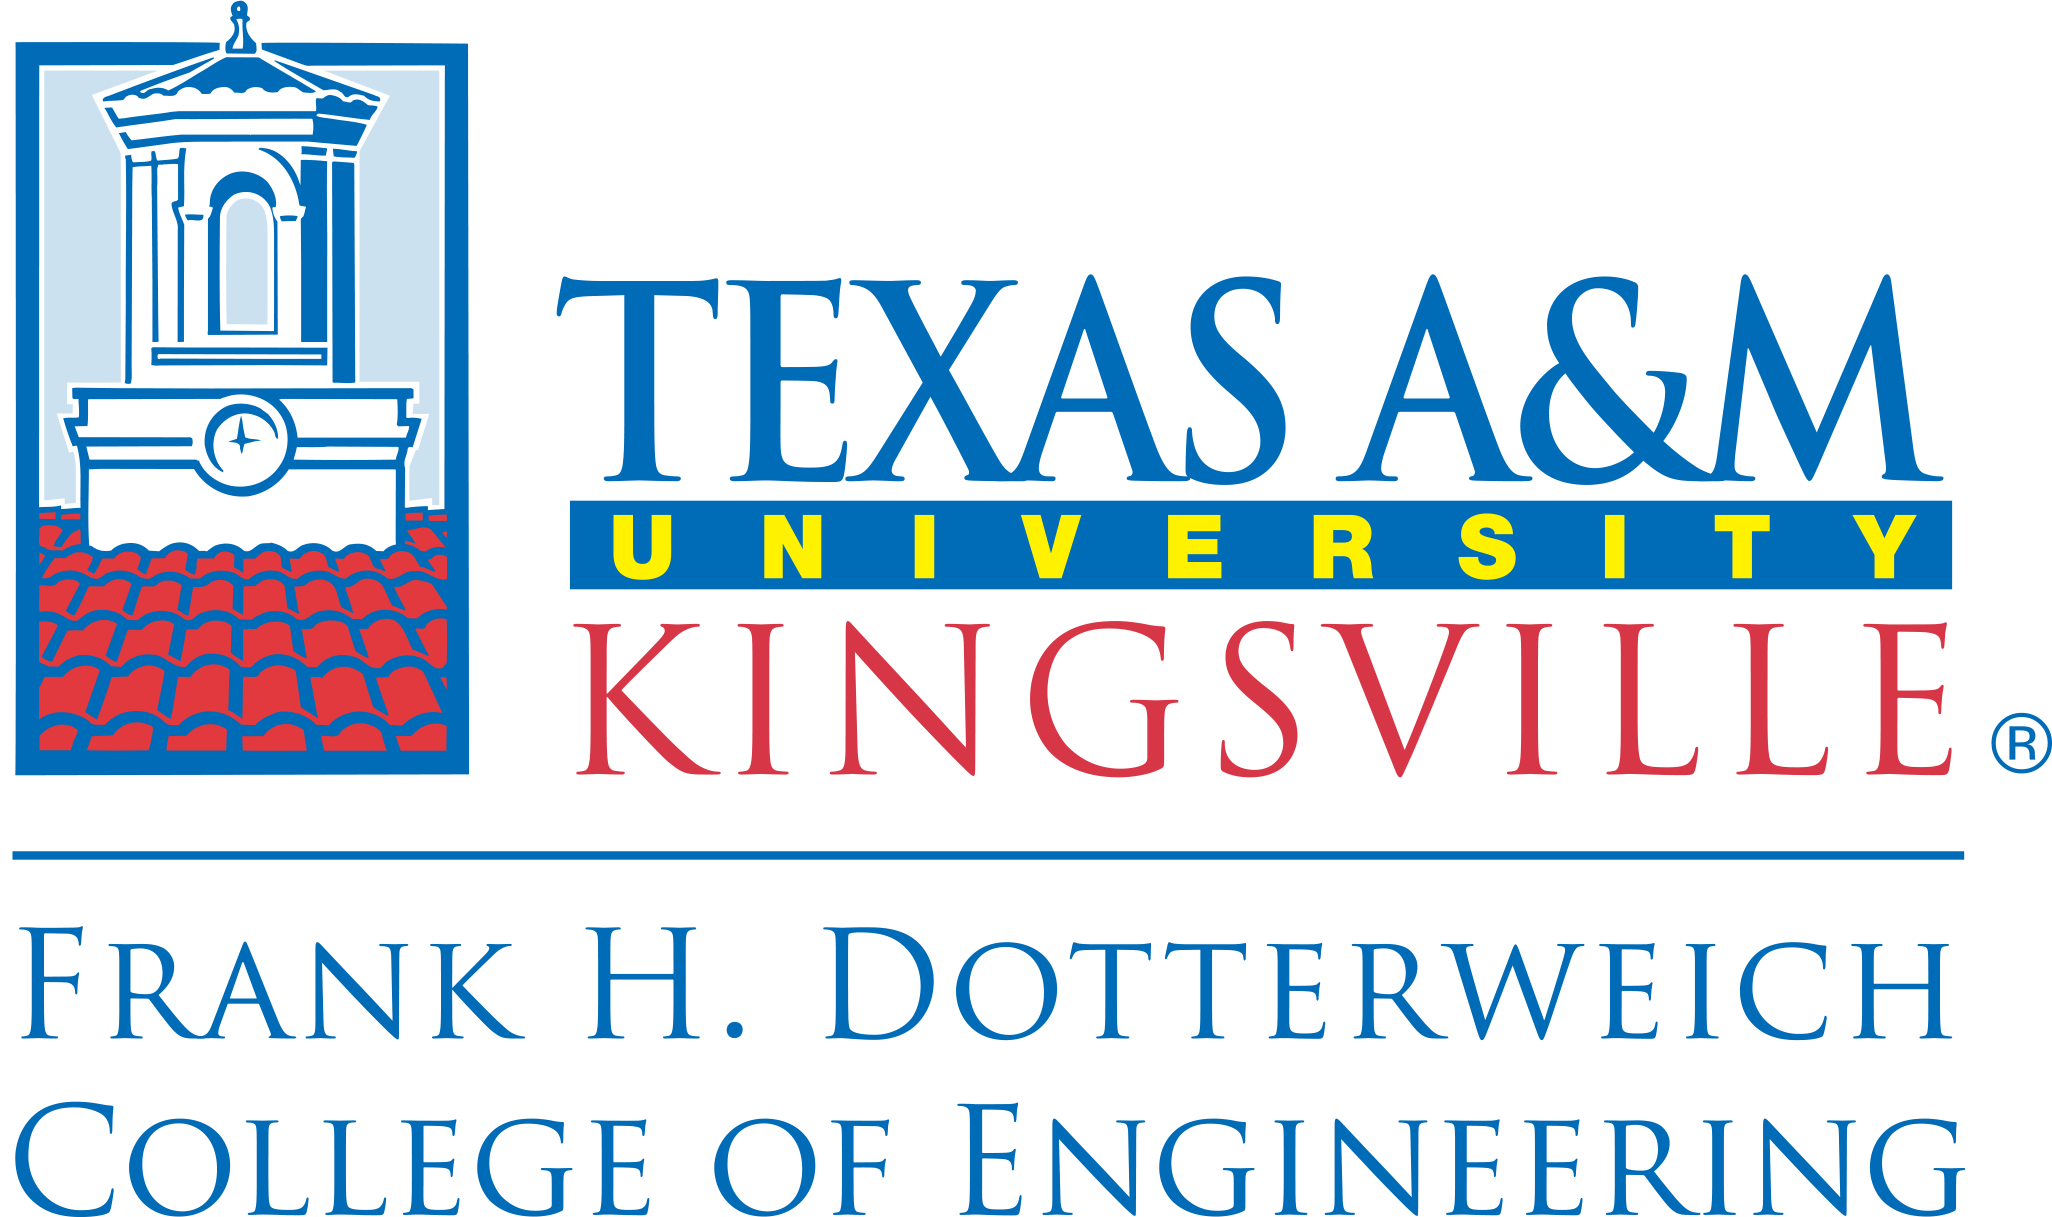 Frank H. Dotterweich College of Engineering logo